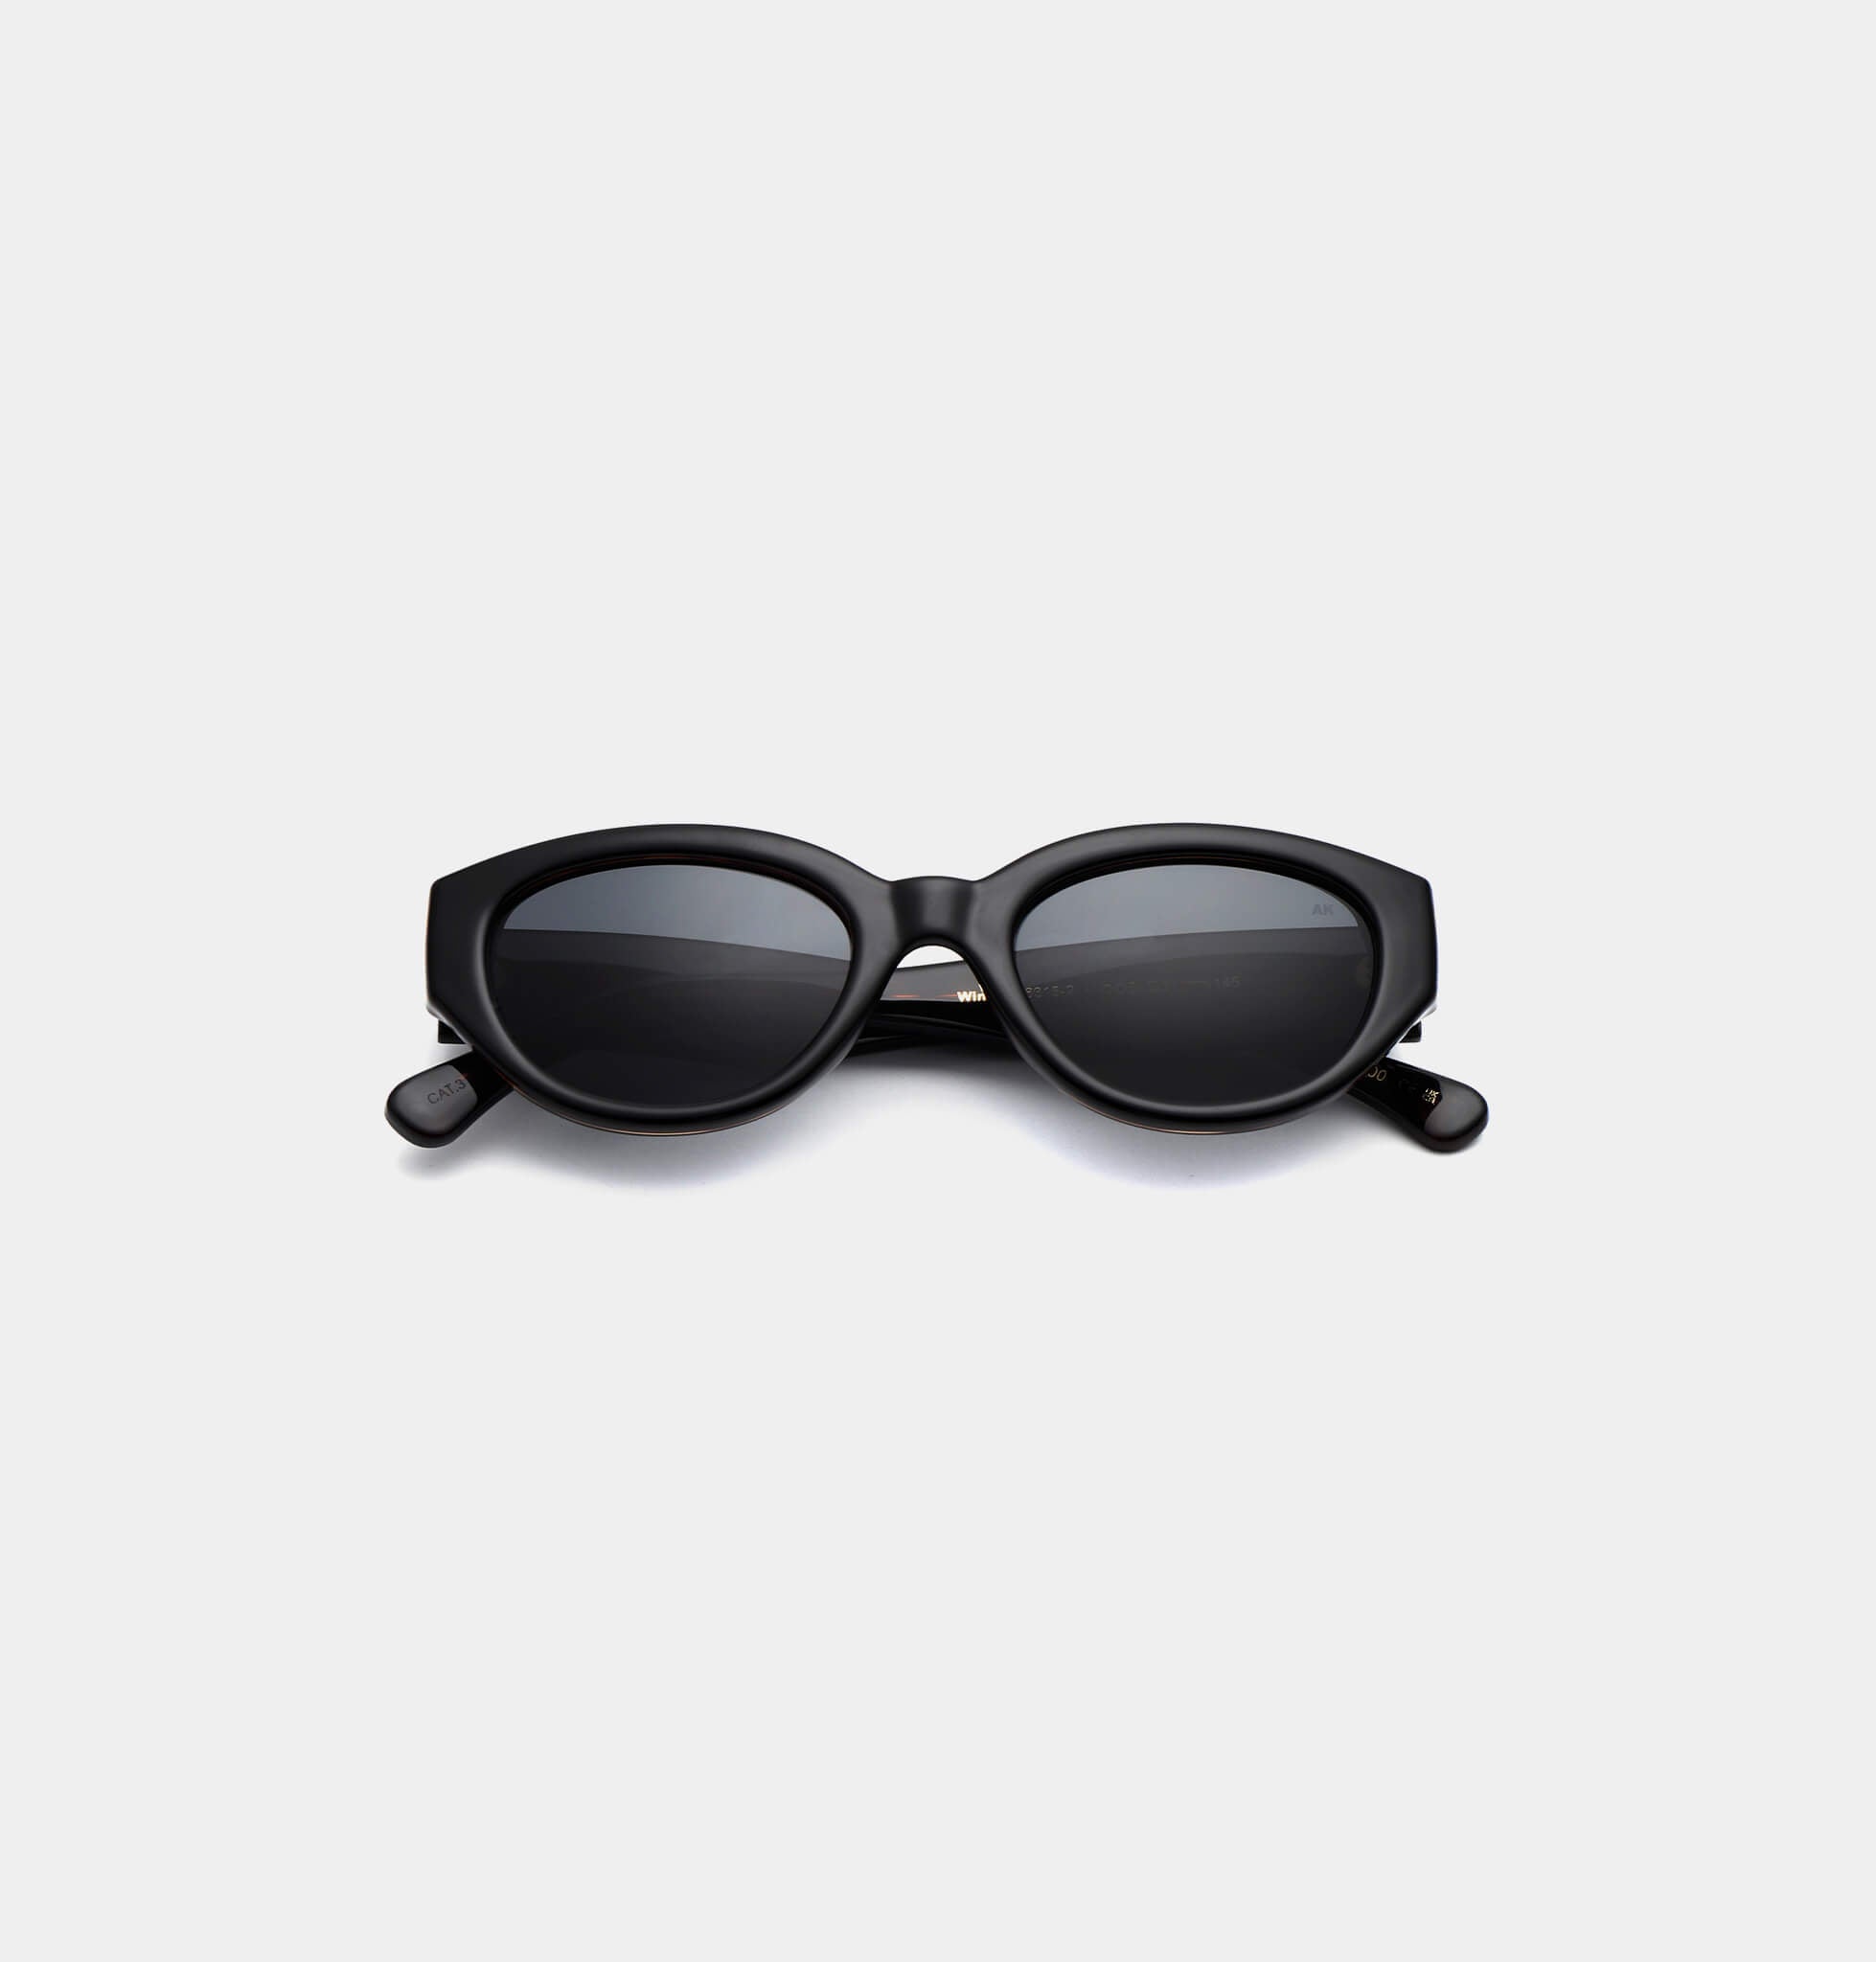 Winnie sunglasses in black